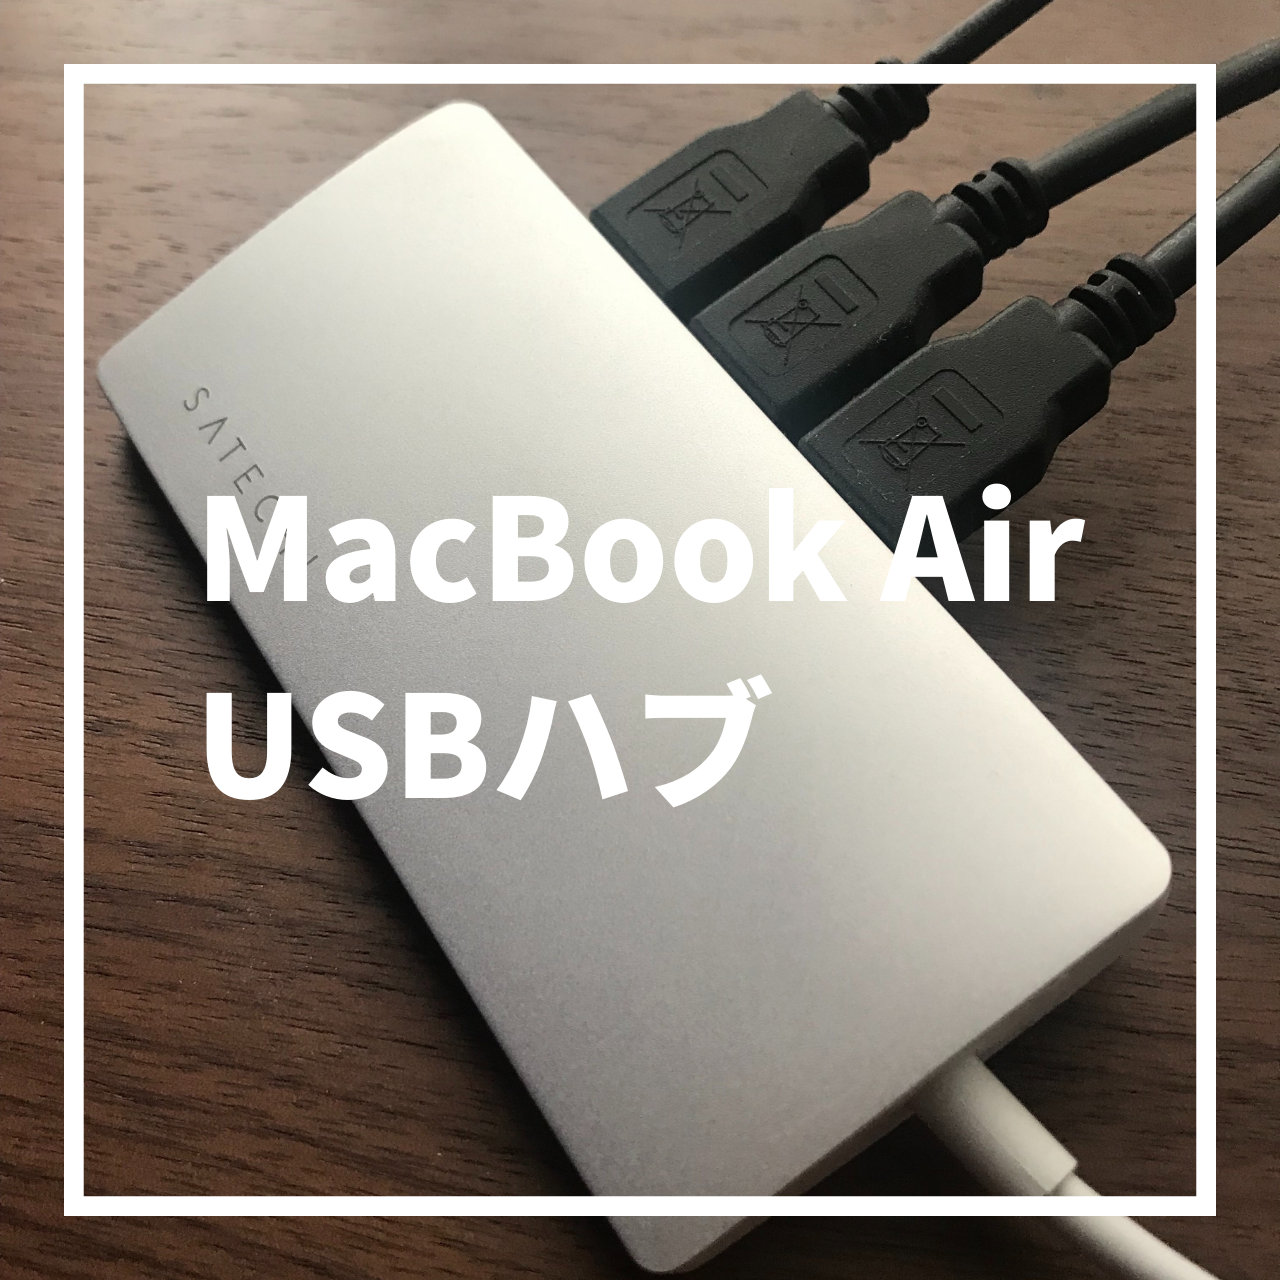 M1 MacBook Air の USB ポート不足を補う USB ハブを購入